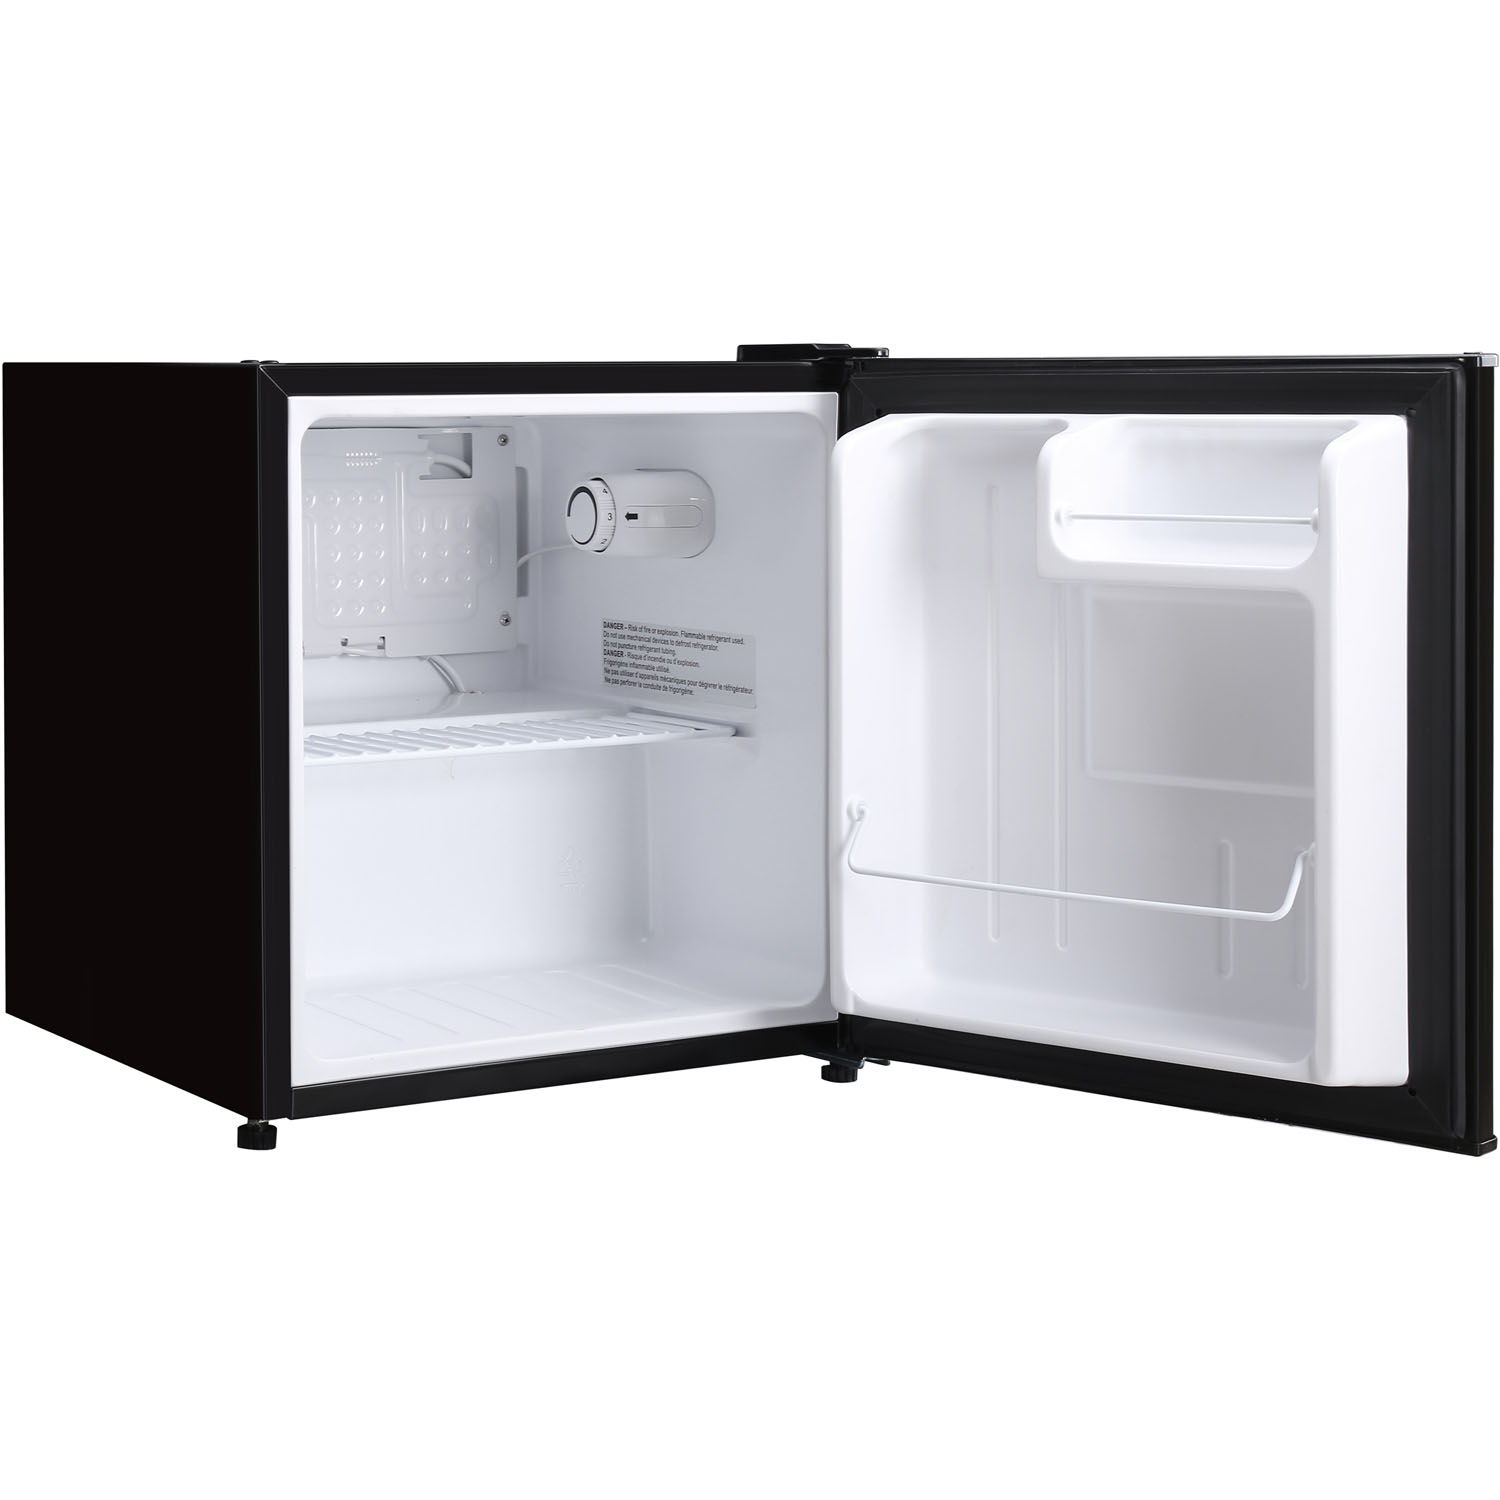 Magic Chef Energy Star 1.7 Cu. Ft. Mini All-Refrigerator in Black - image 2 of 4